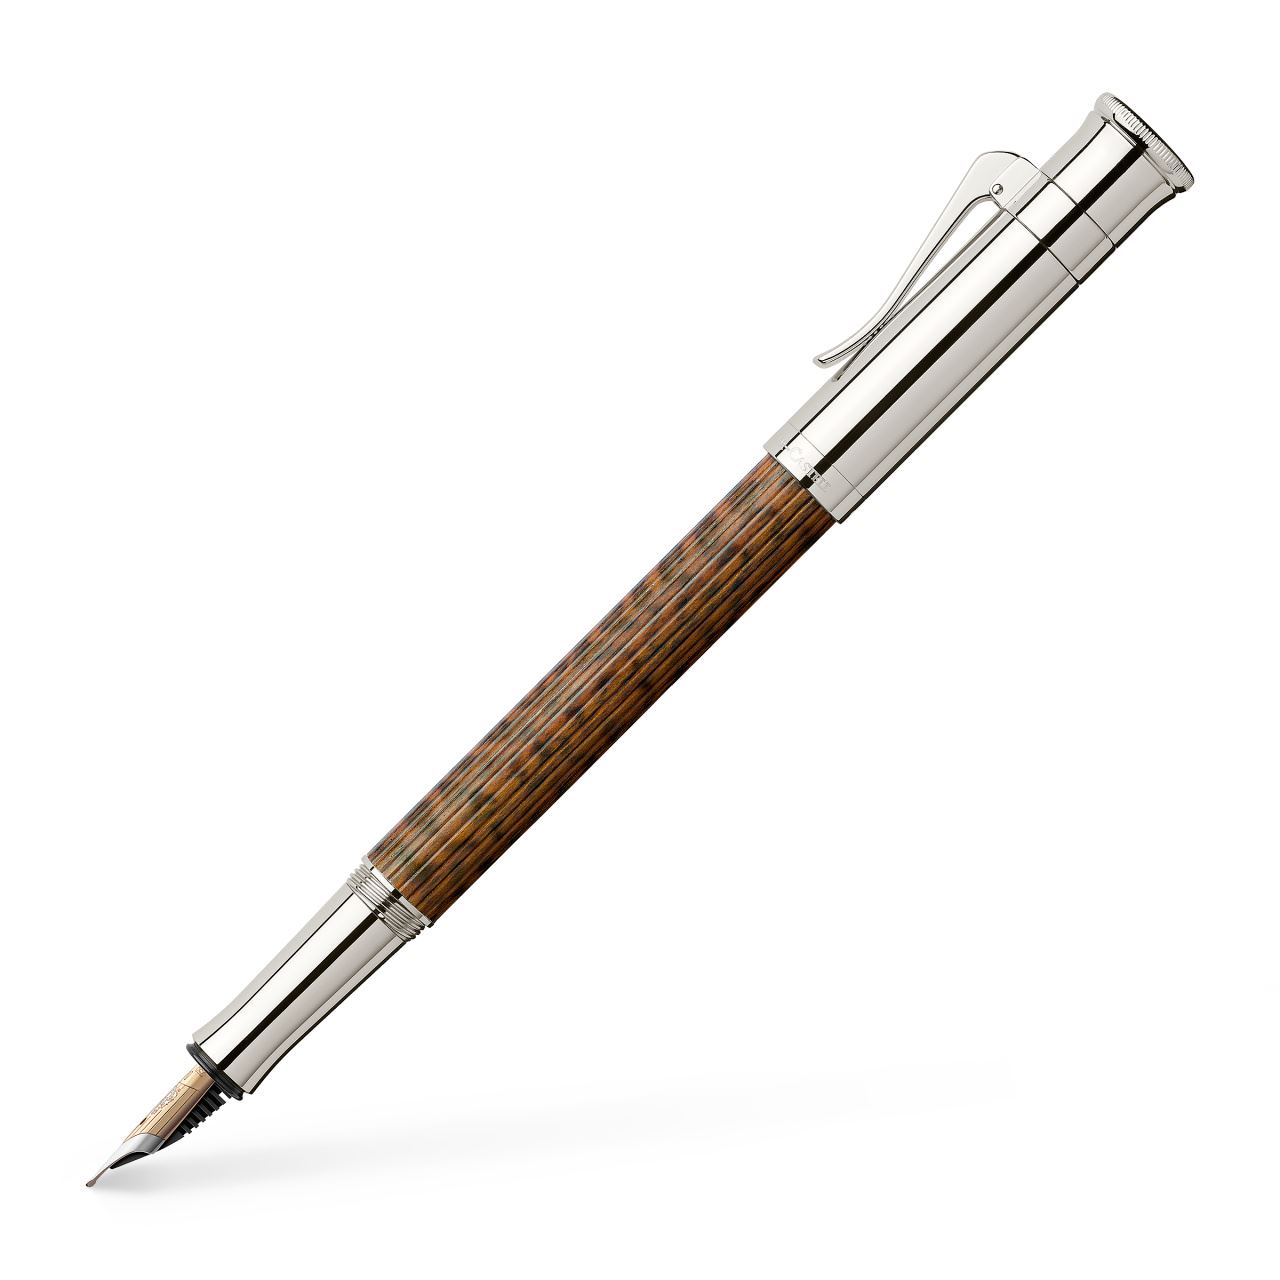 Graf-von-Faber-Castell - Fountain pen Limited Edition Snakewood Medium